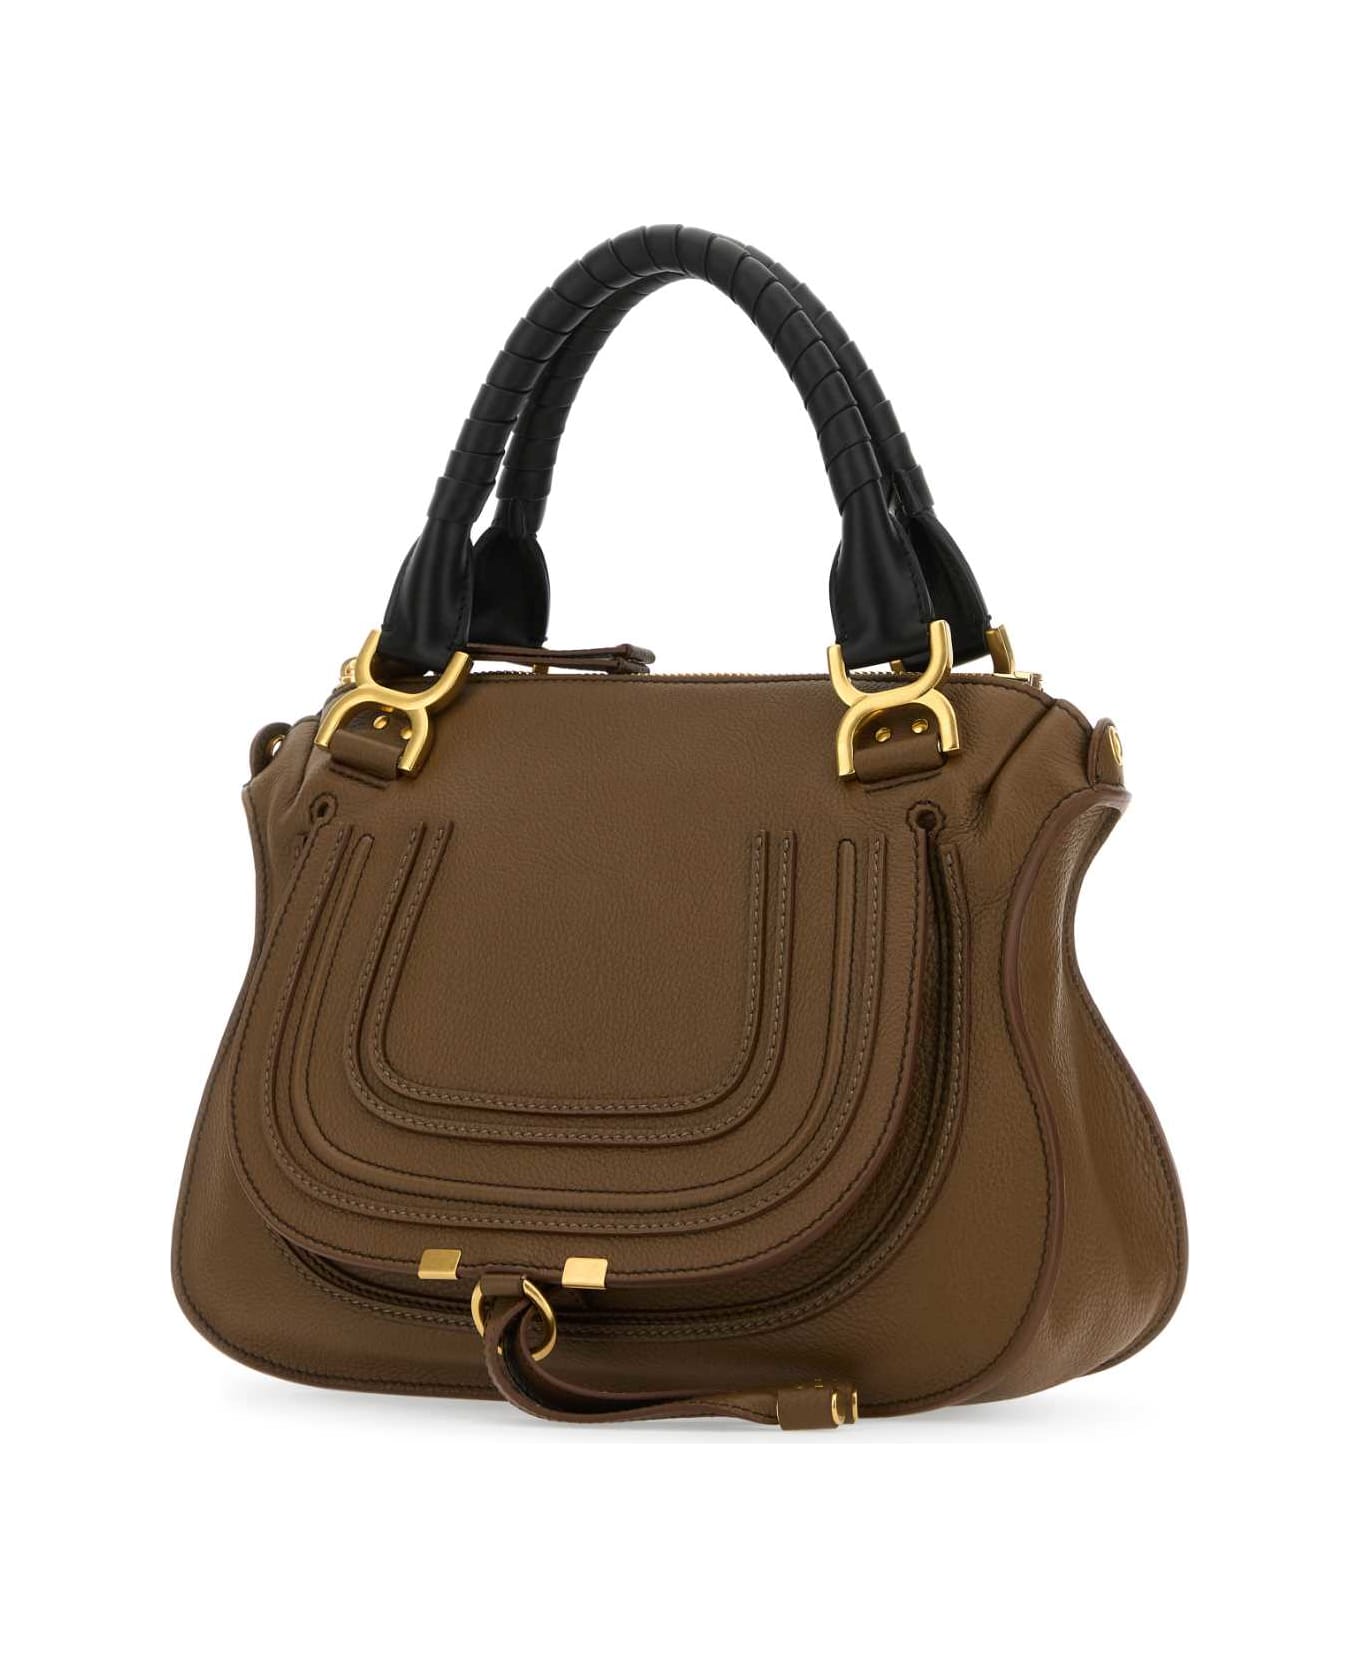 Chloé Brown Leather Small Marcie Handbag - PALMBROWN